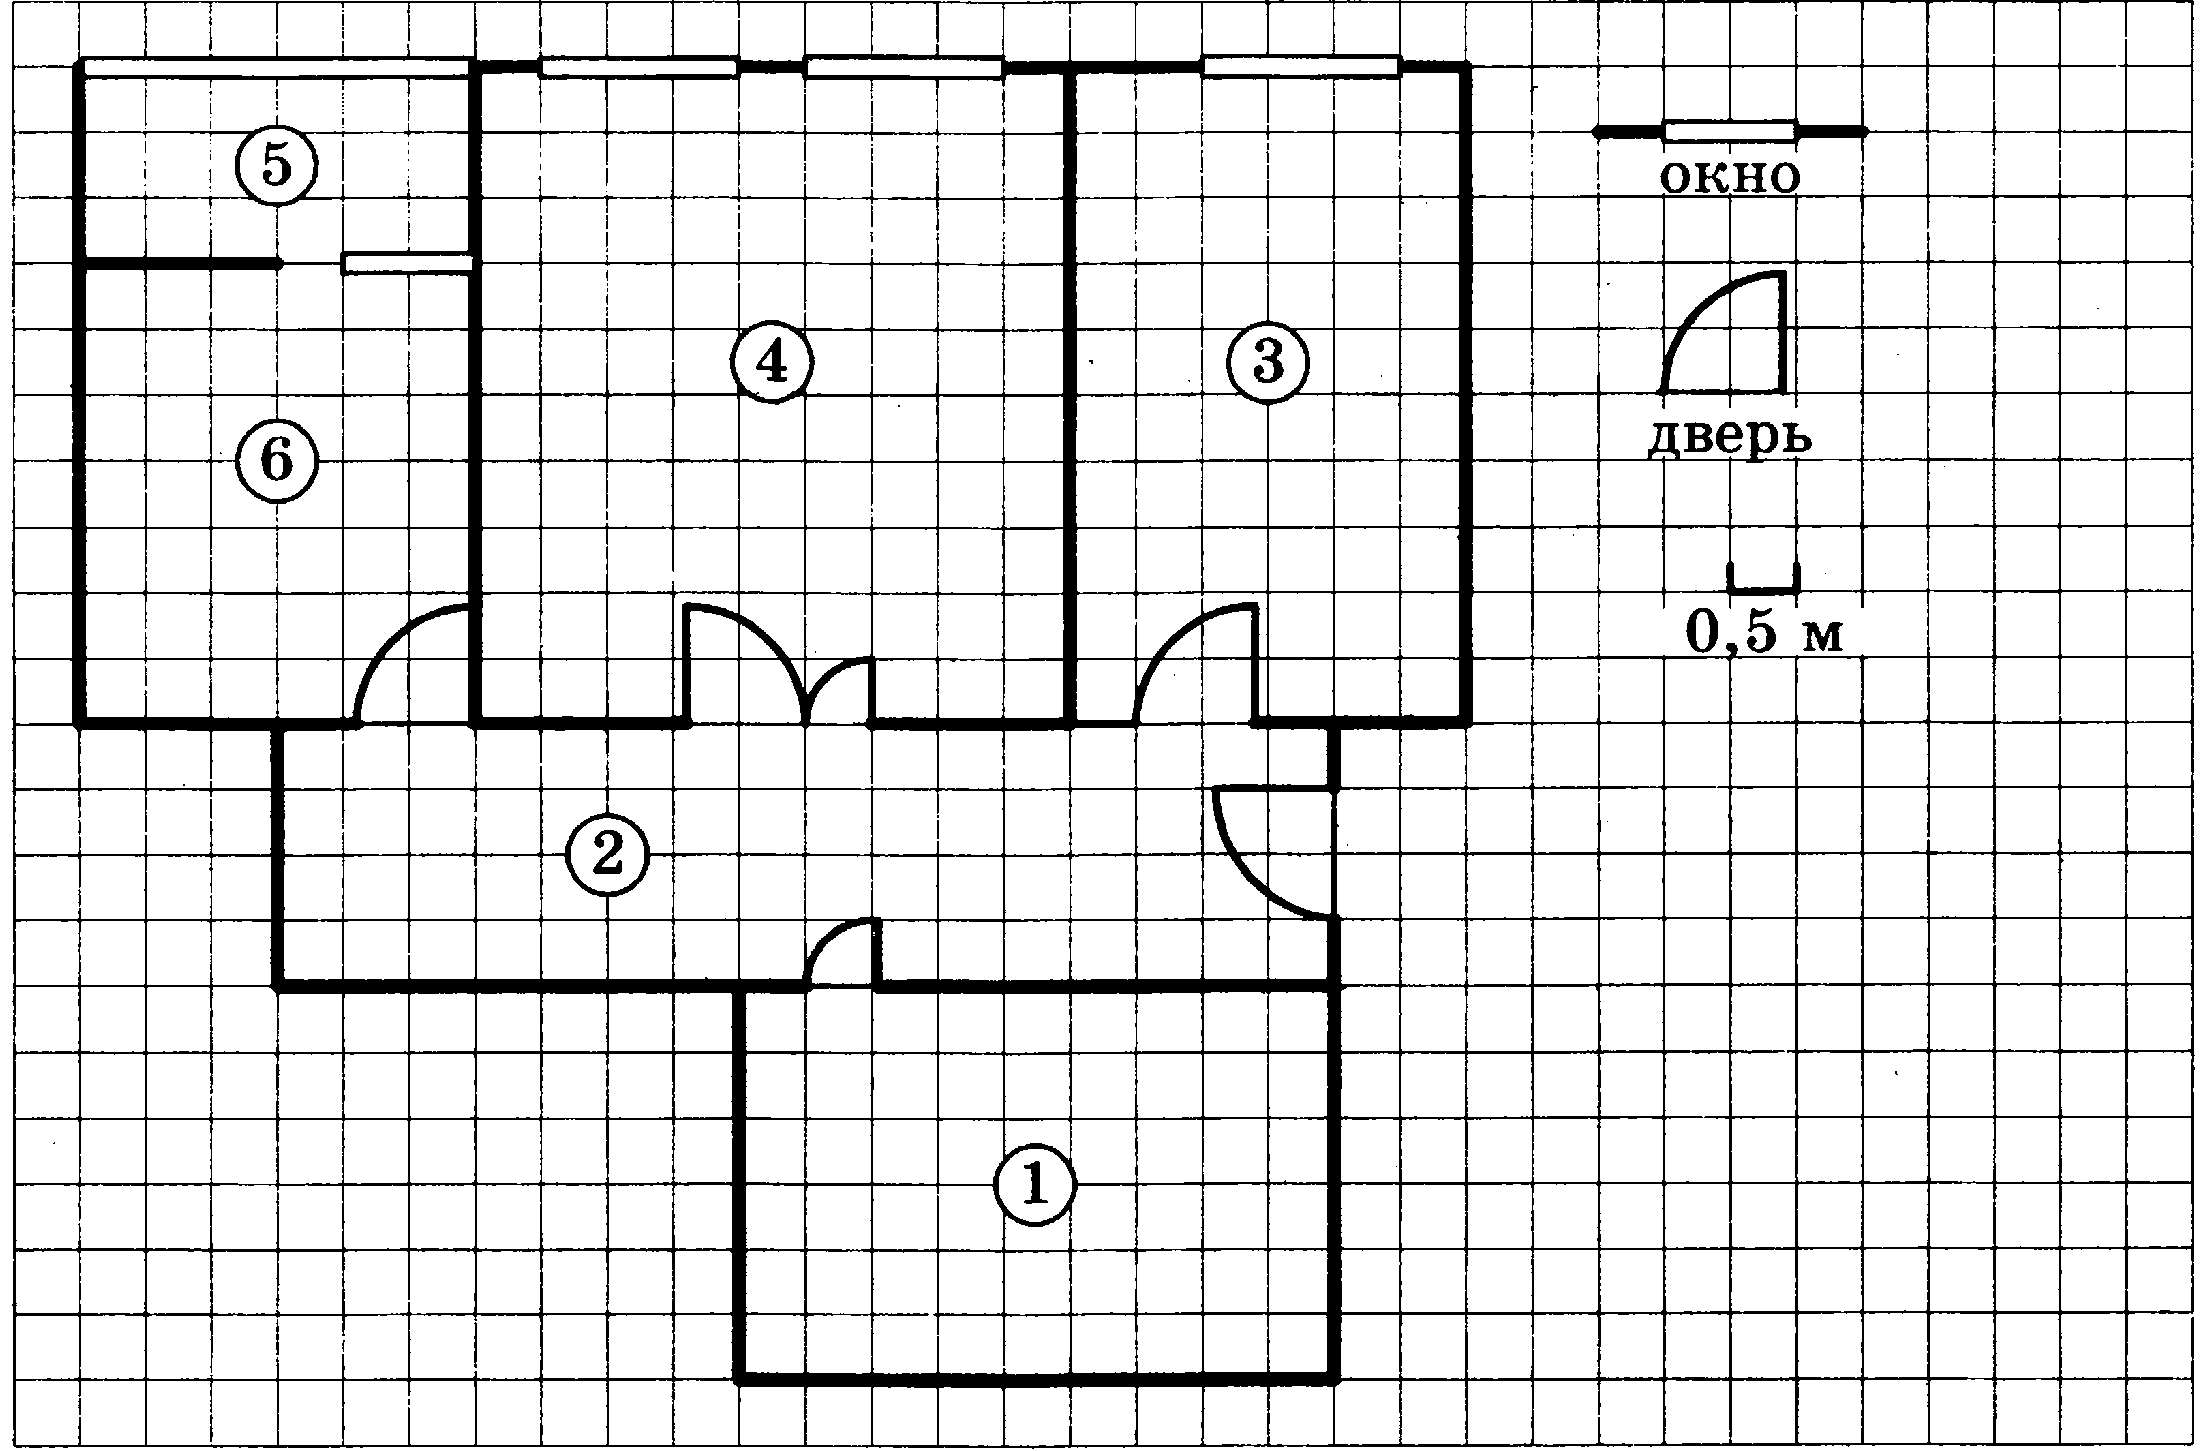 Огэ математика задание 1 квартира. Задания 1-5 план квартиры. На рисунке изображен план двухкомнатной квартиры. На рисунке изображен план двухкомнатной квартиры в многоэтажном доме. Задача план двухкомнатной квартиры.